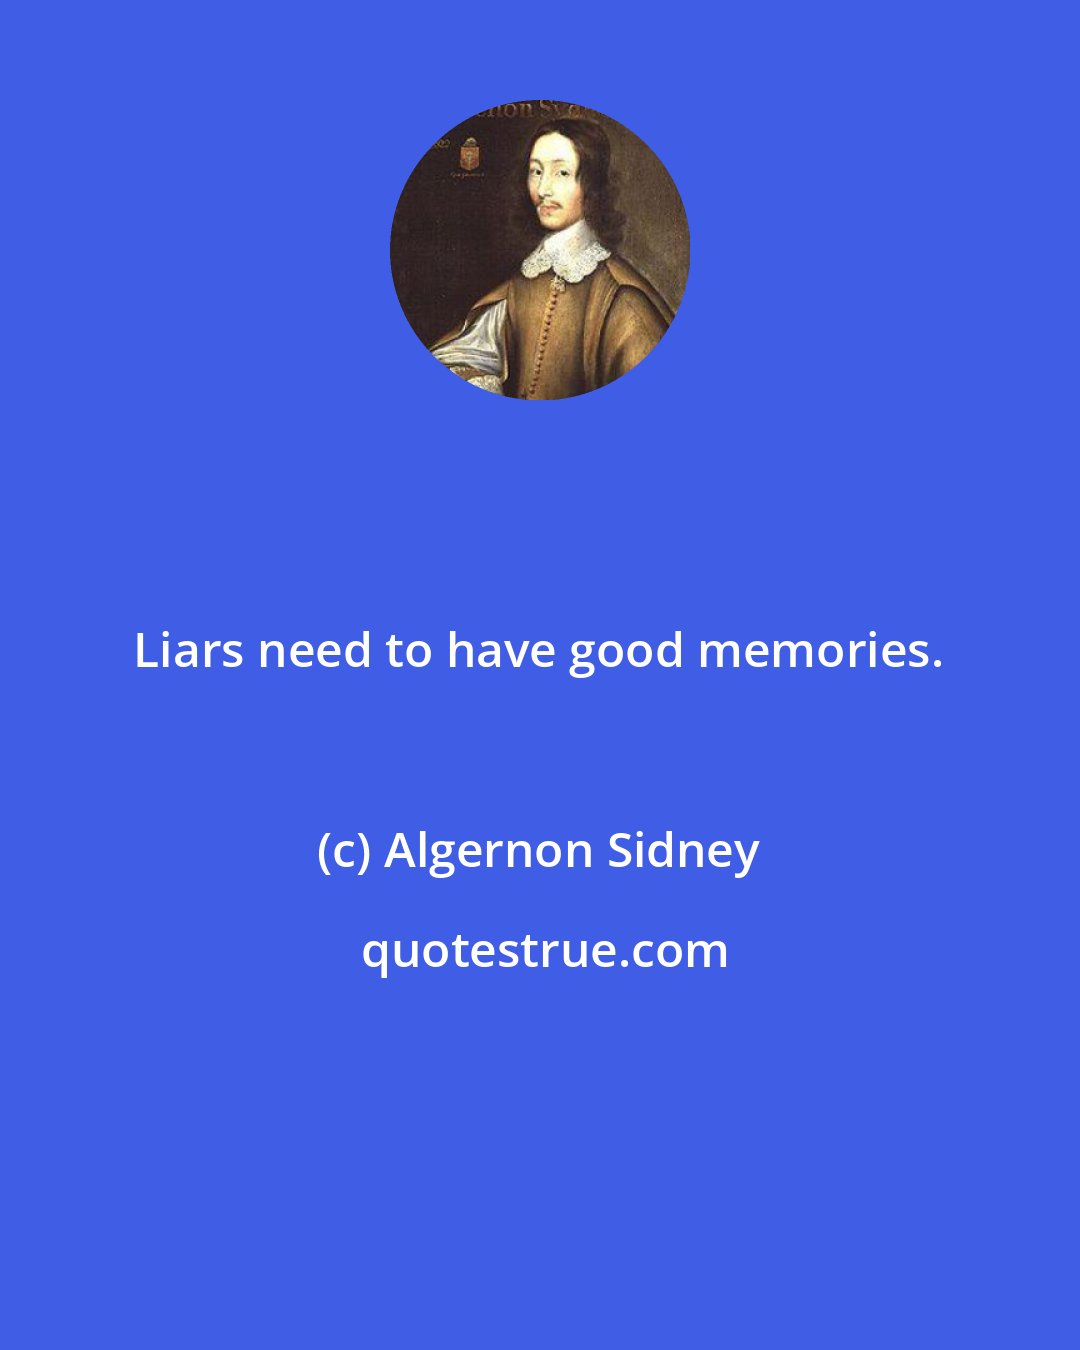 Algernon Sidney: Liars need to have good memories.